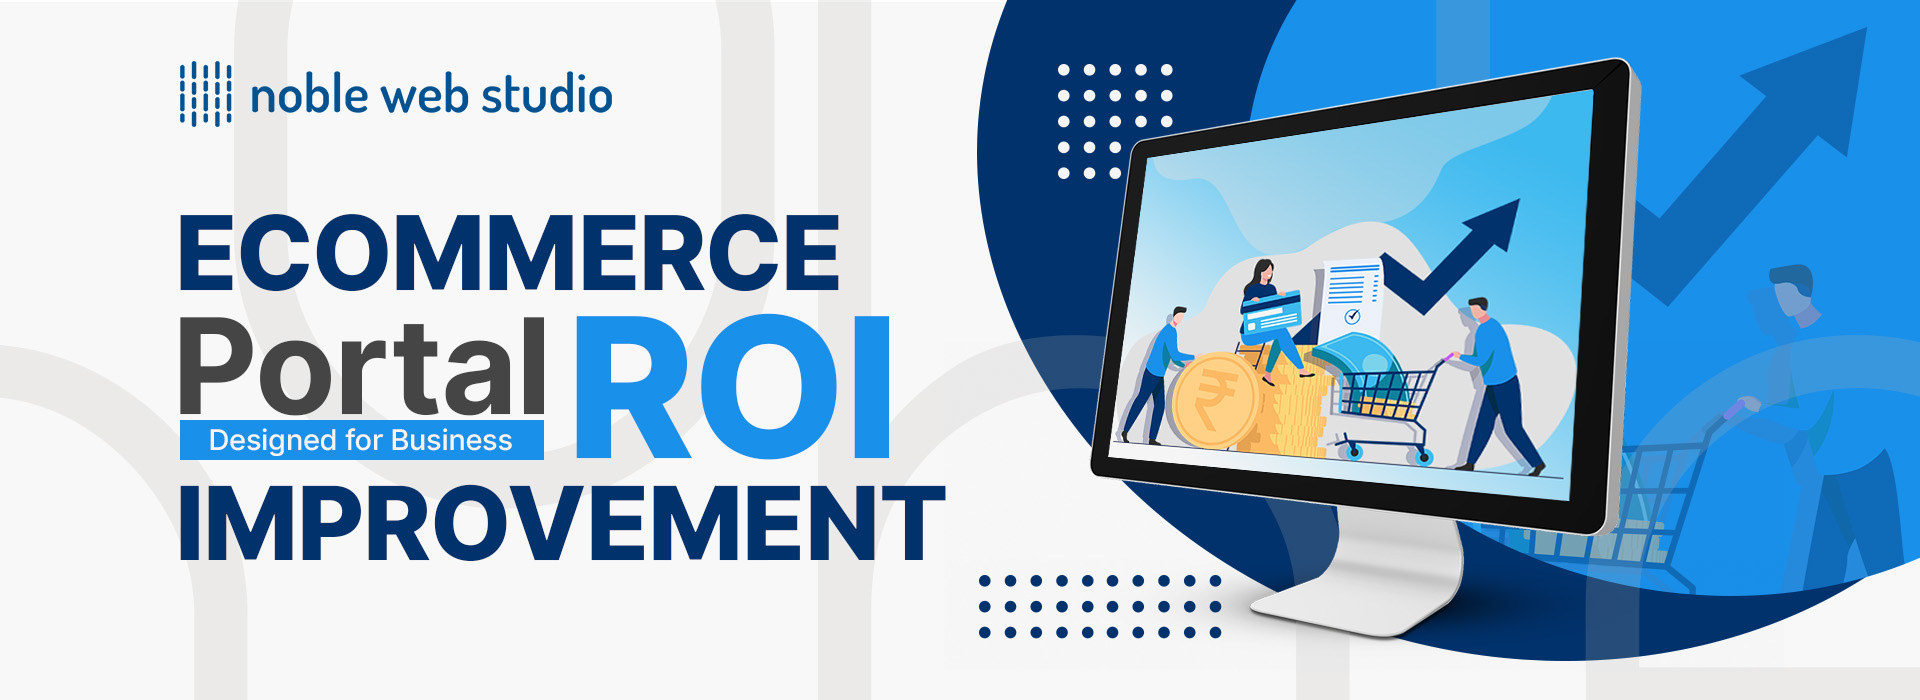 eCommerce Portal designed for Business ROI Improvement